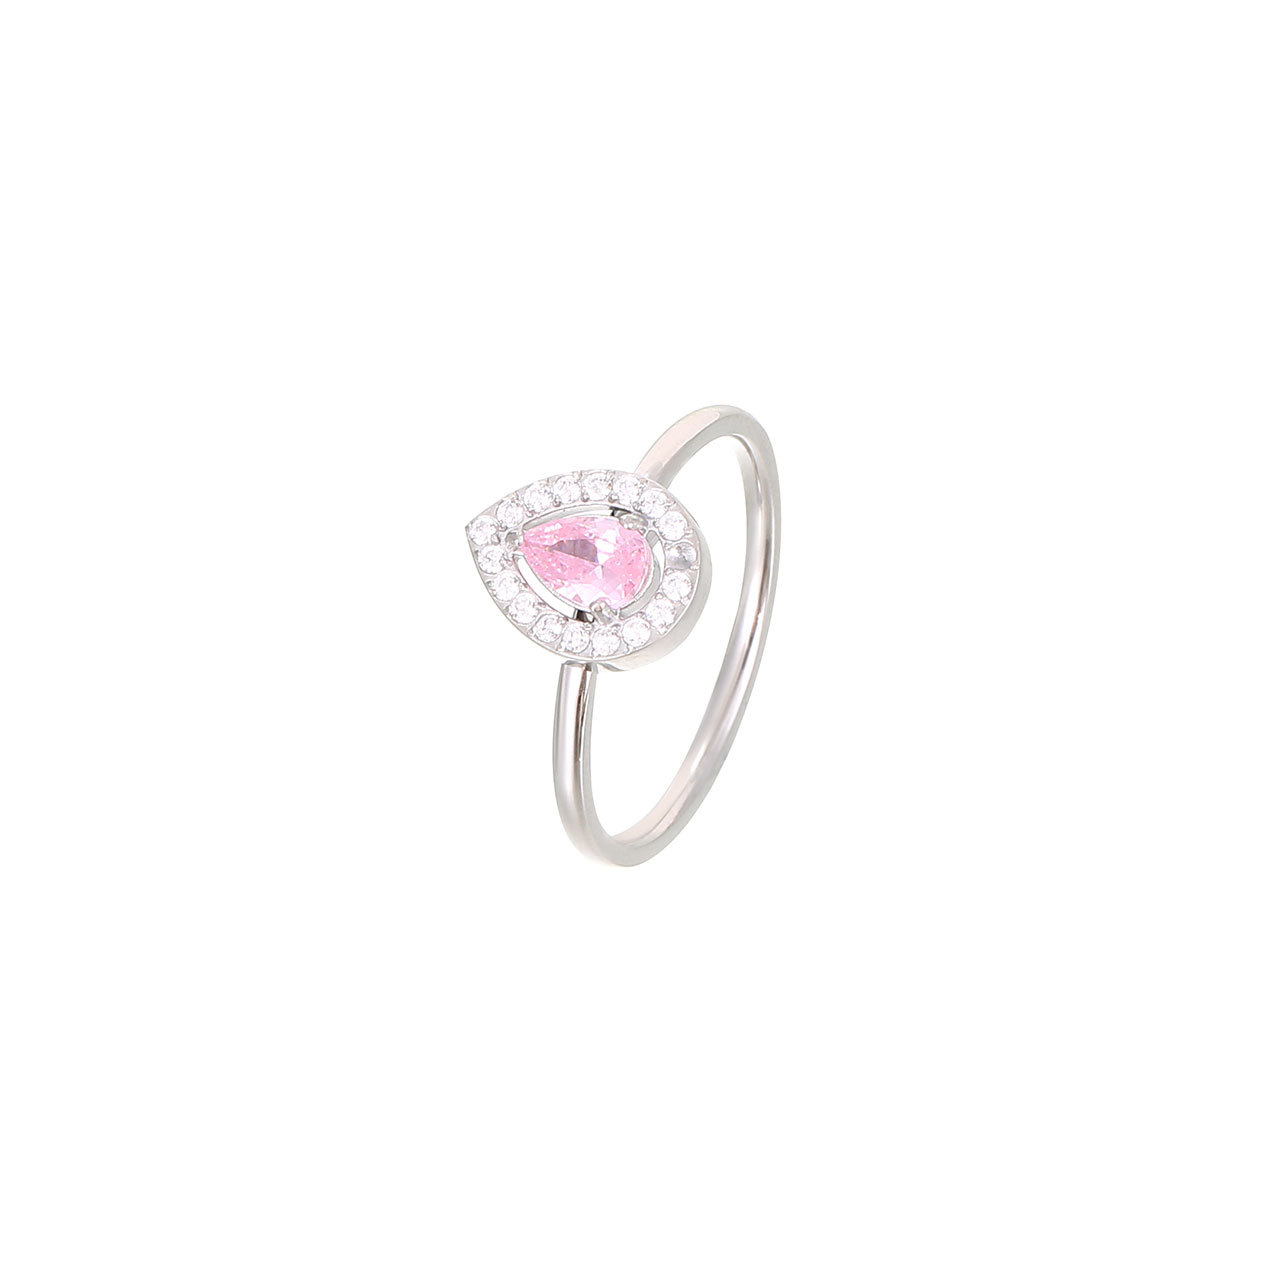 6:Platinum colour - pink zircon